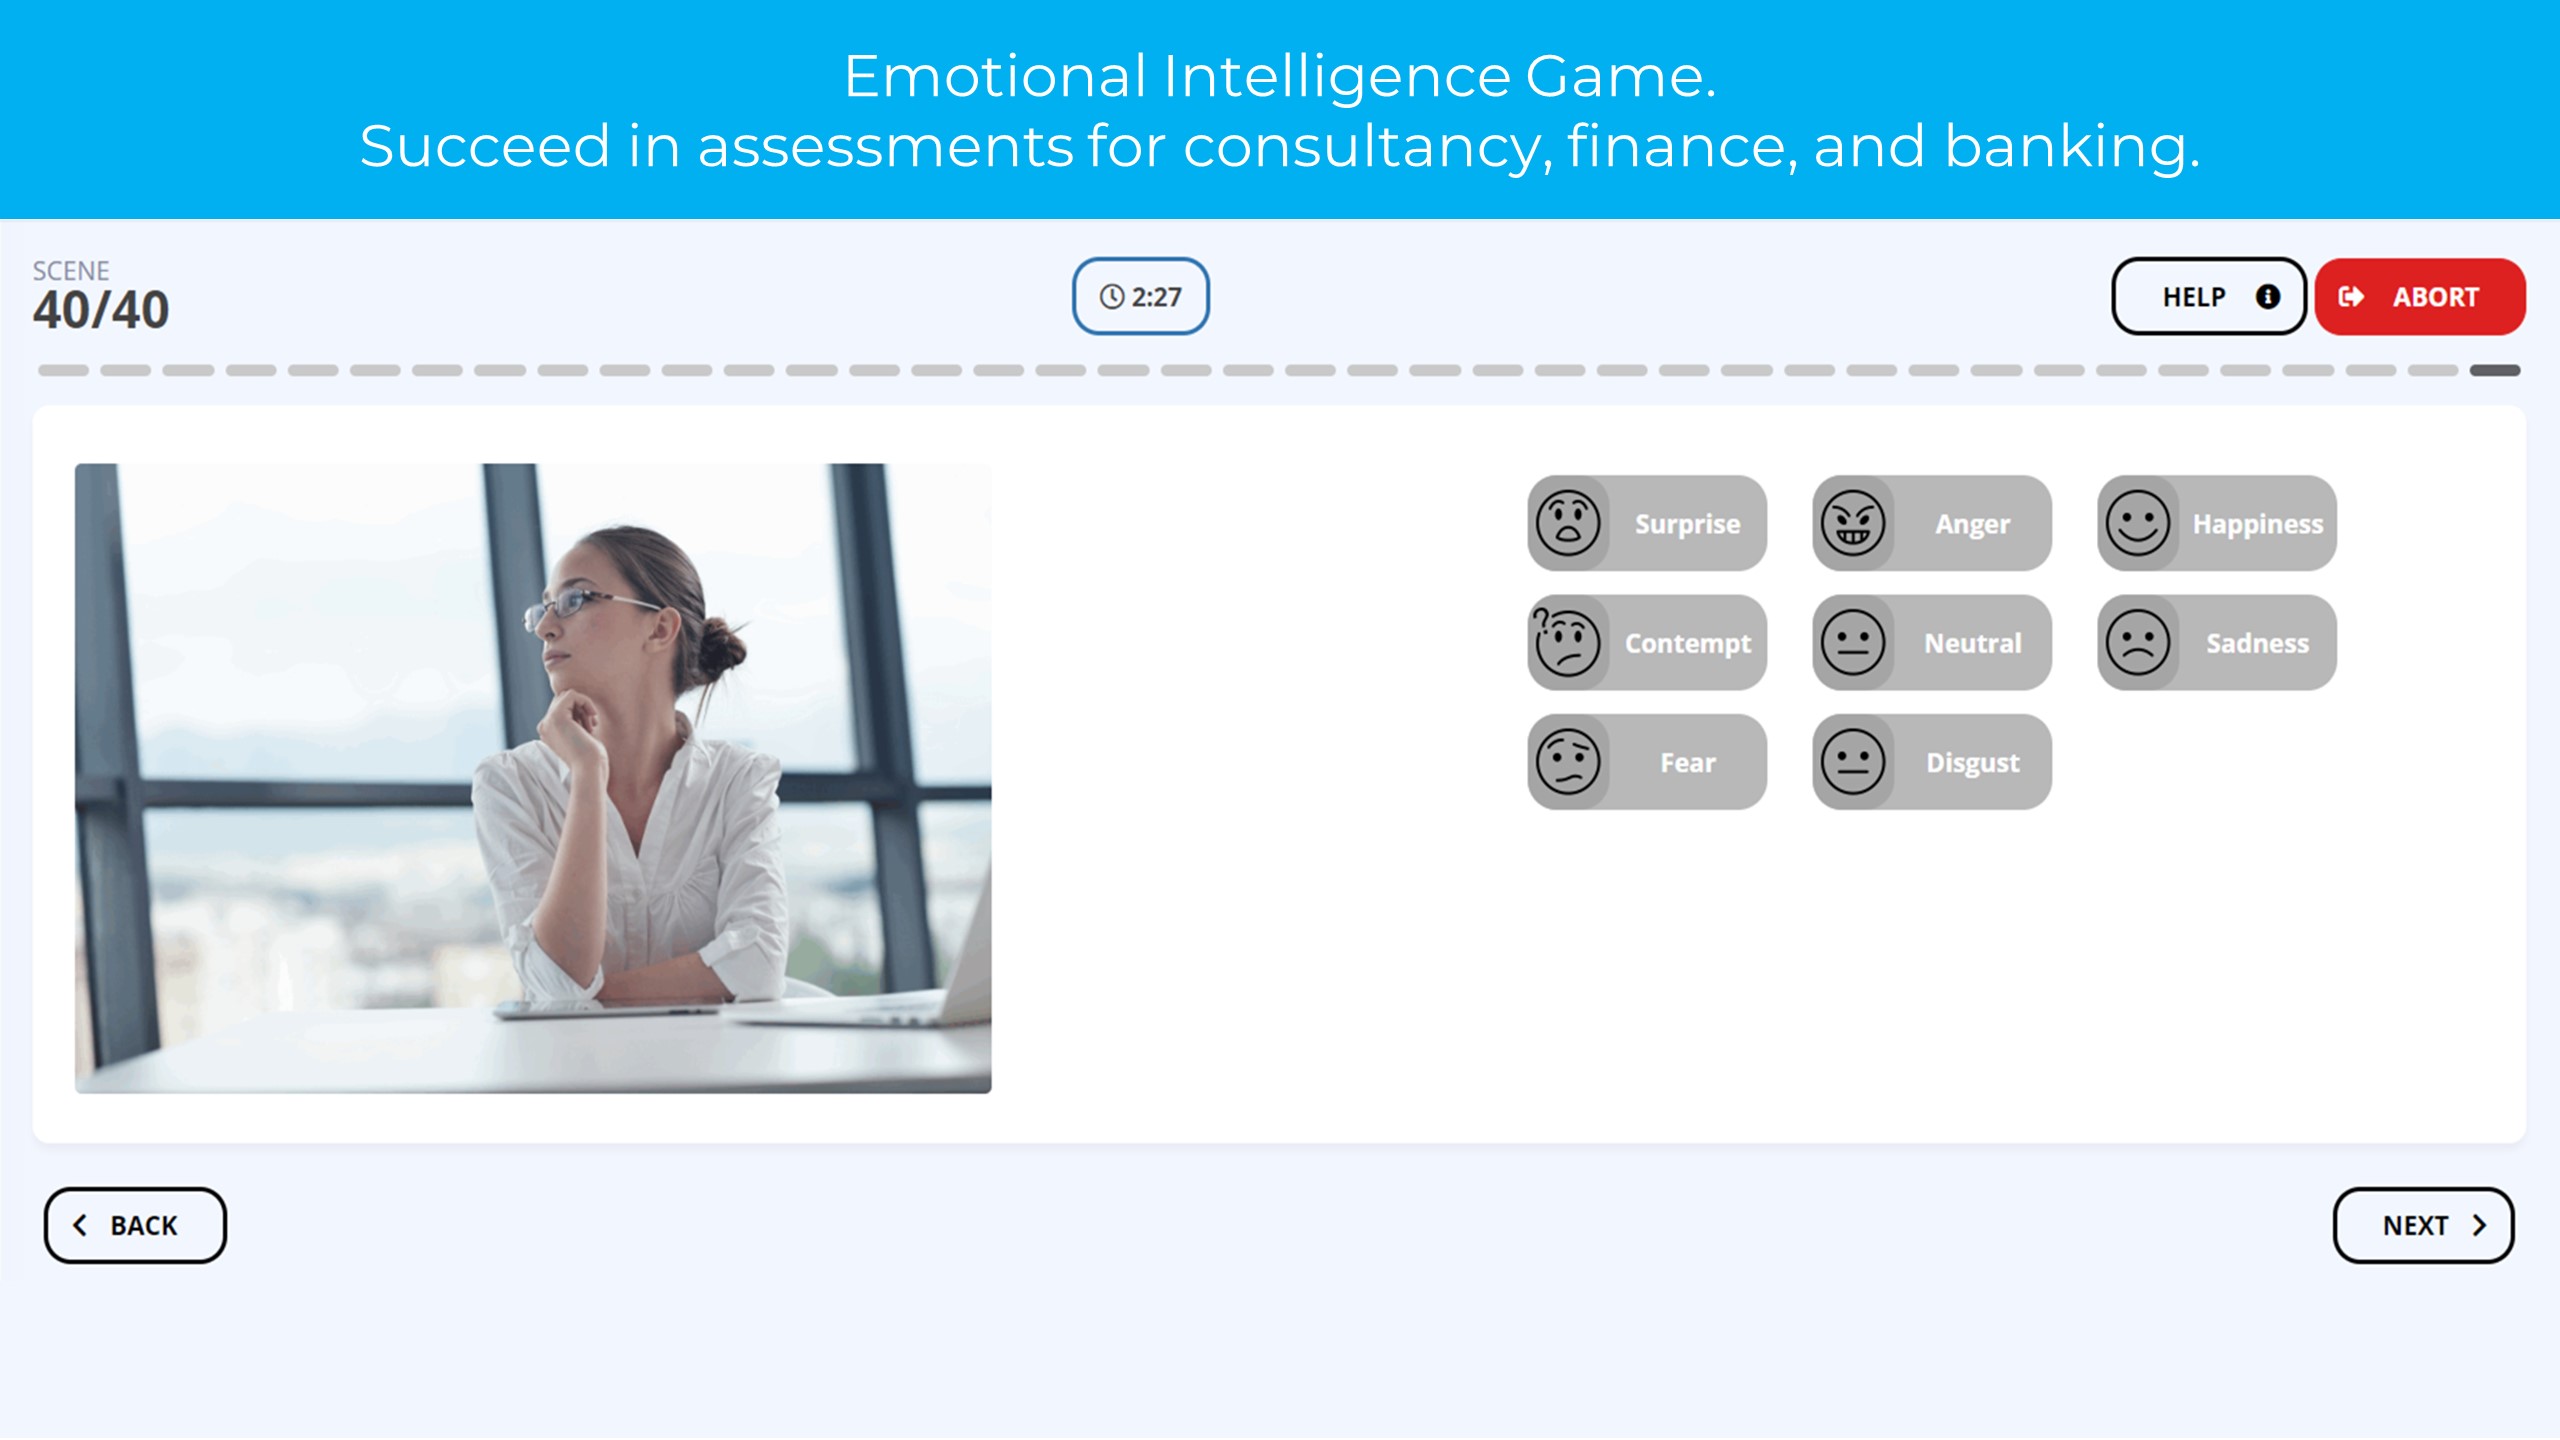 Emotional Intelligence Game-based Assessment